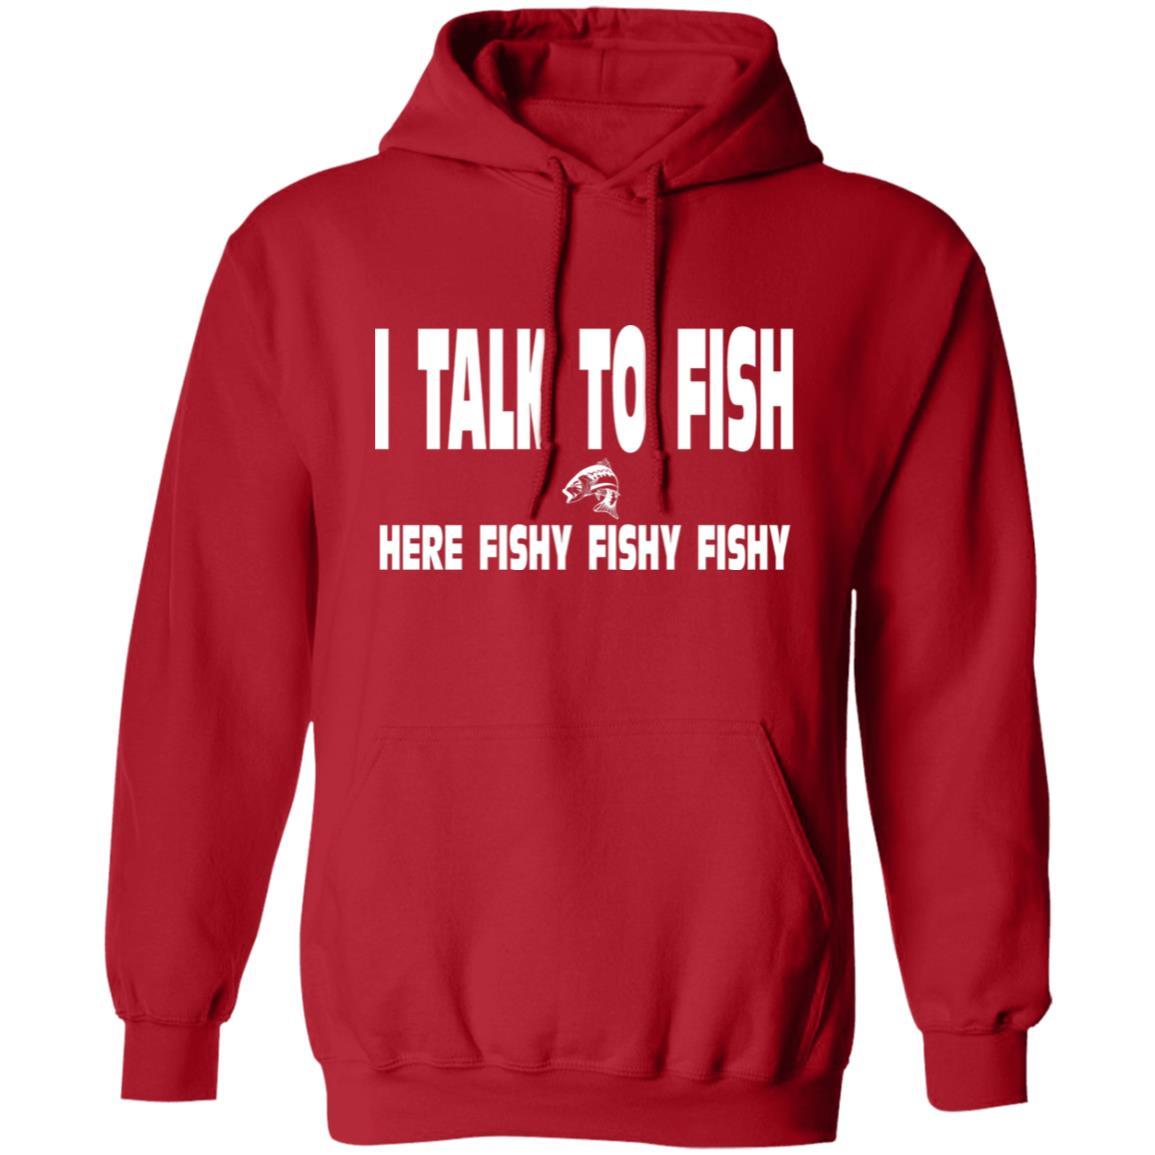 I talk to fish here fishy fishy hoodie w red